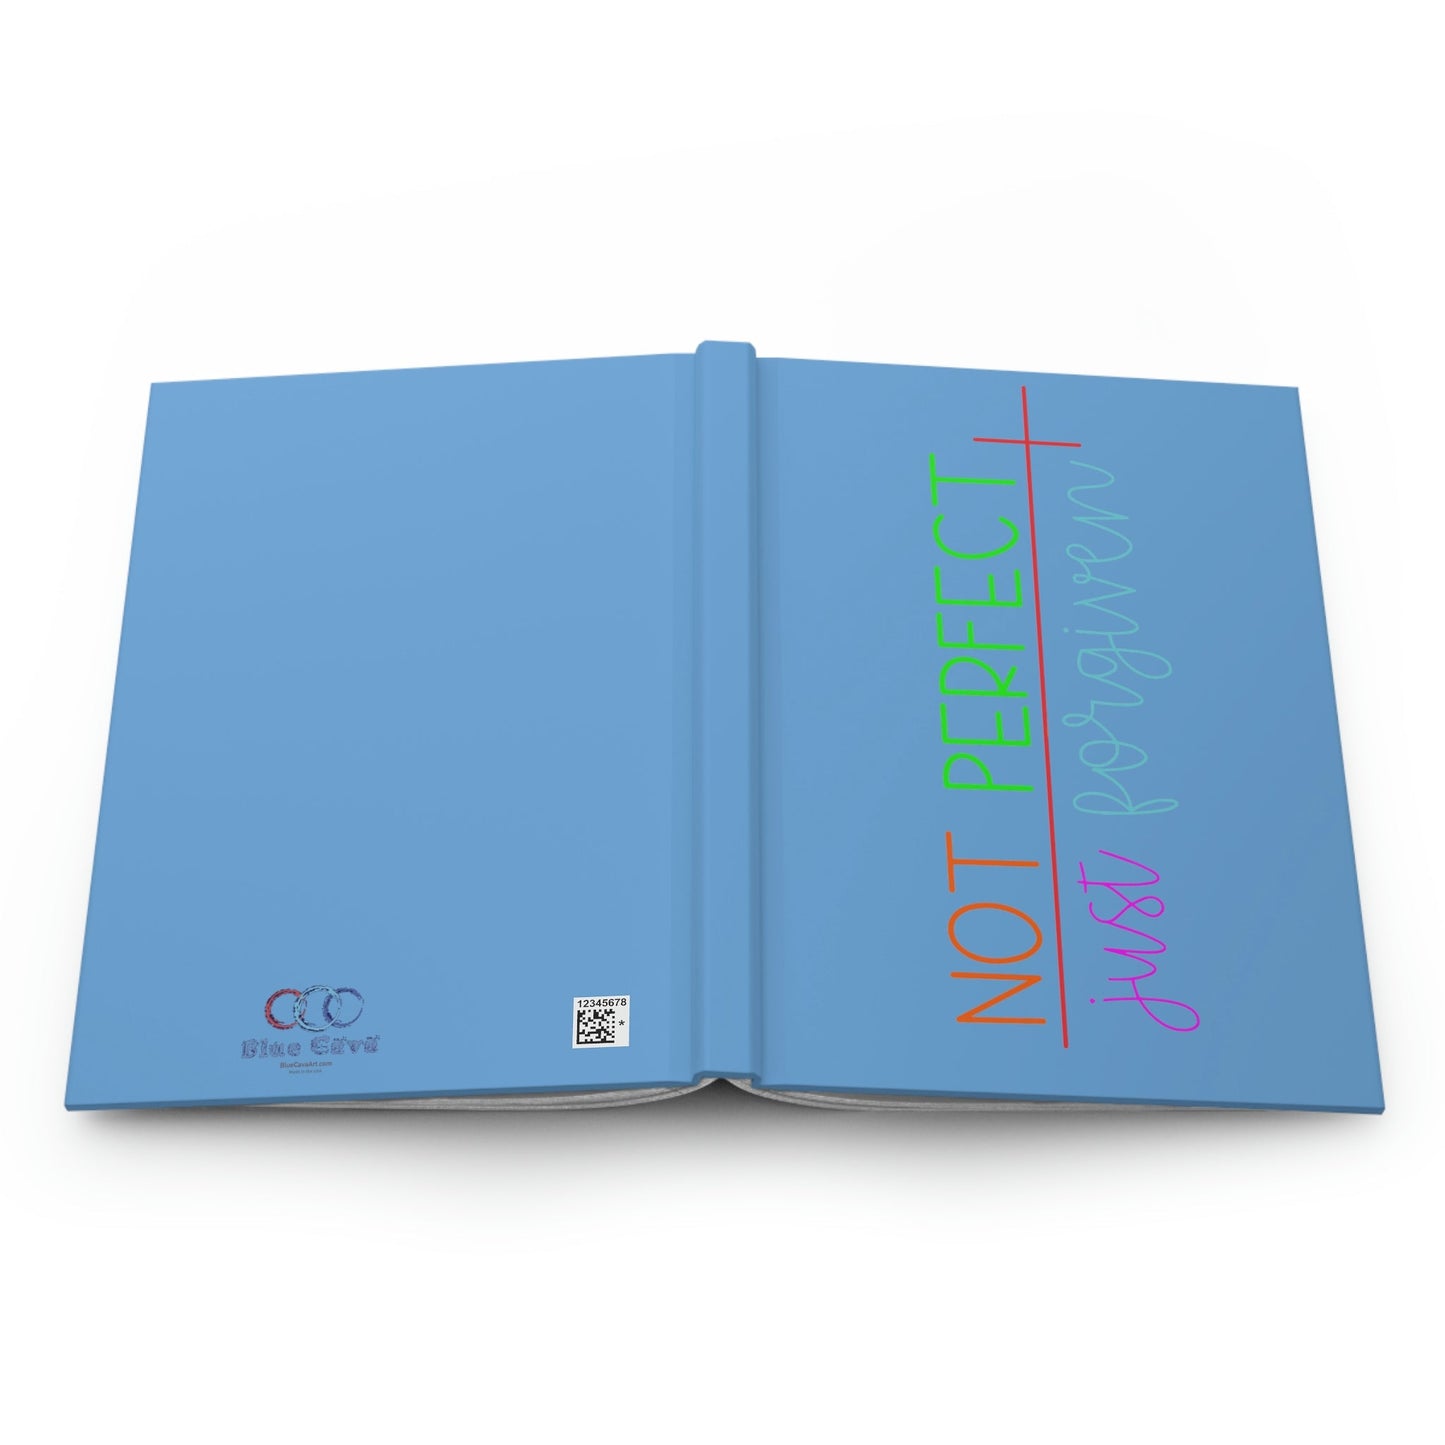 Forgiven Hardcover Journal Matte - Blue Cava